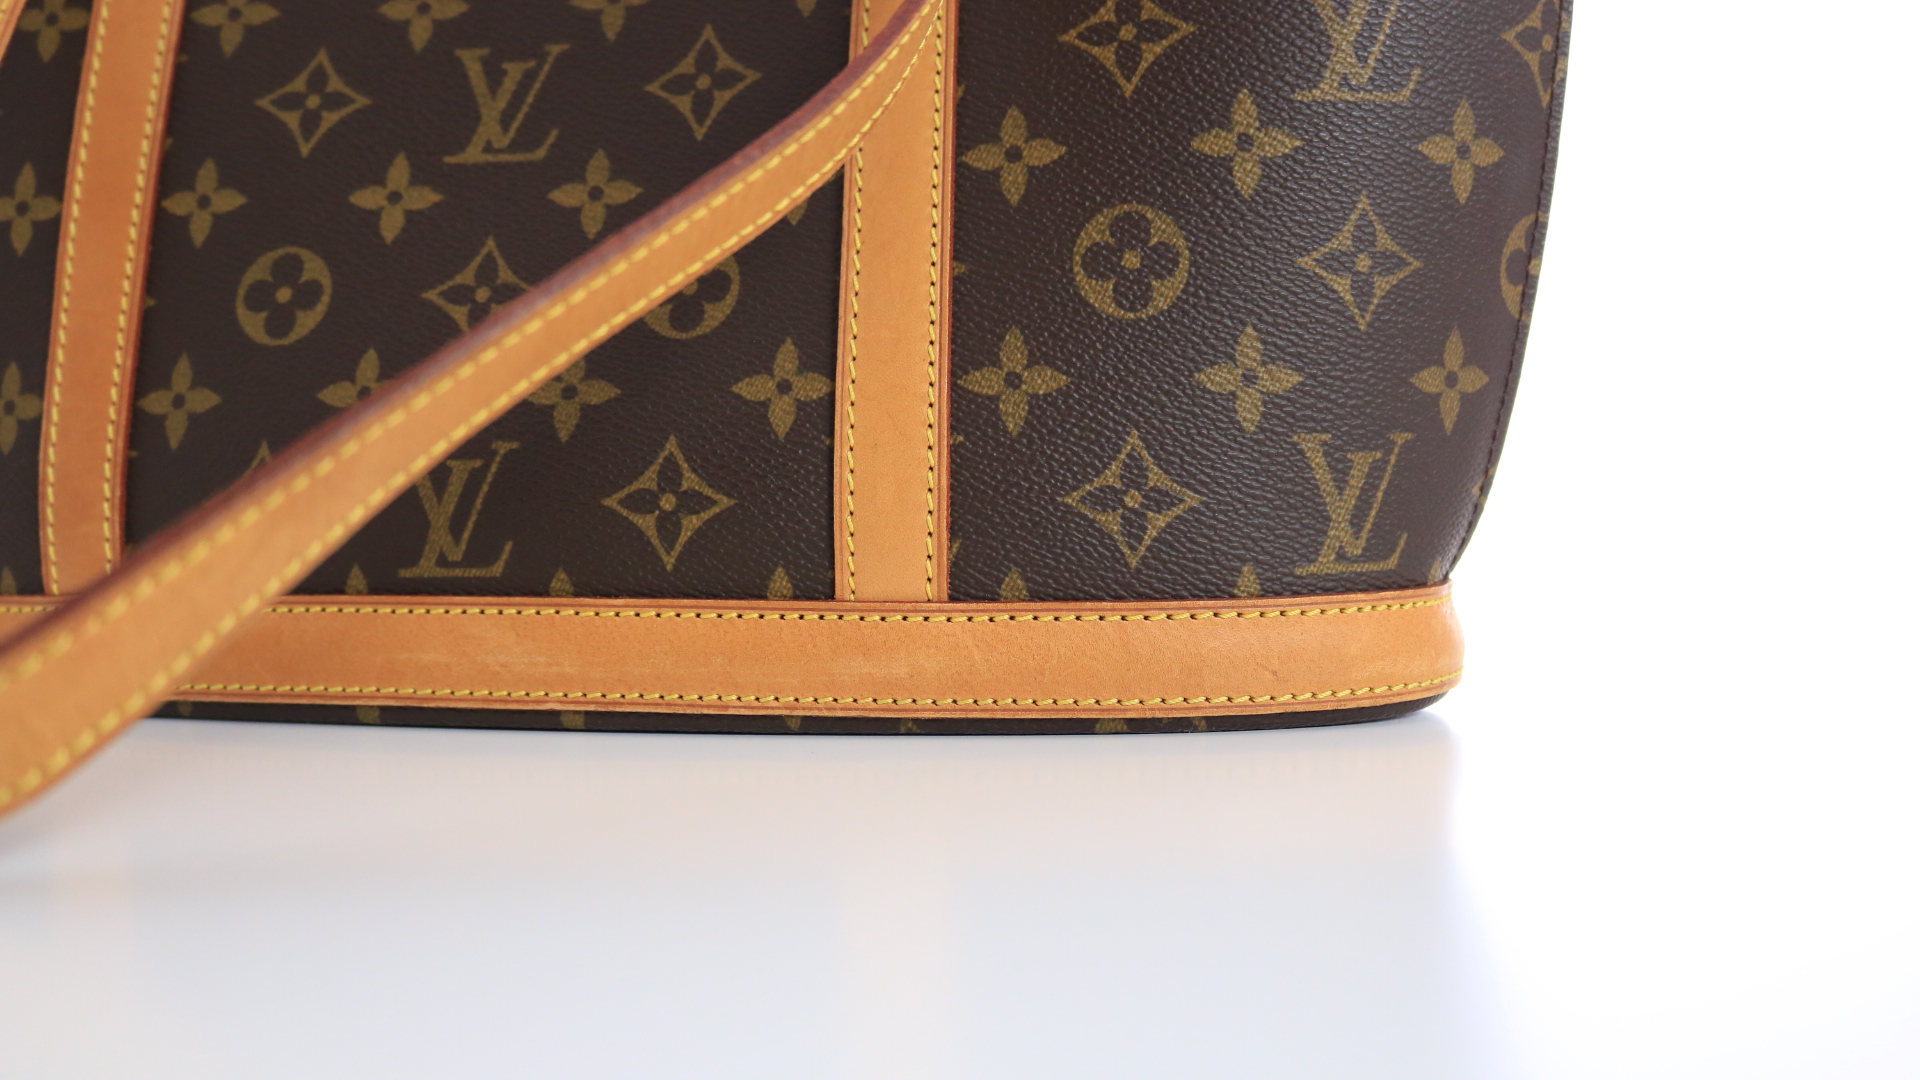 Louis Vuitton Label Babylon Shoulder Bag w/Dust Bag. - Bunting